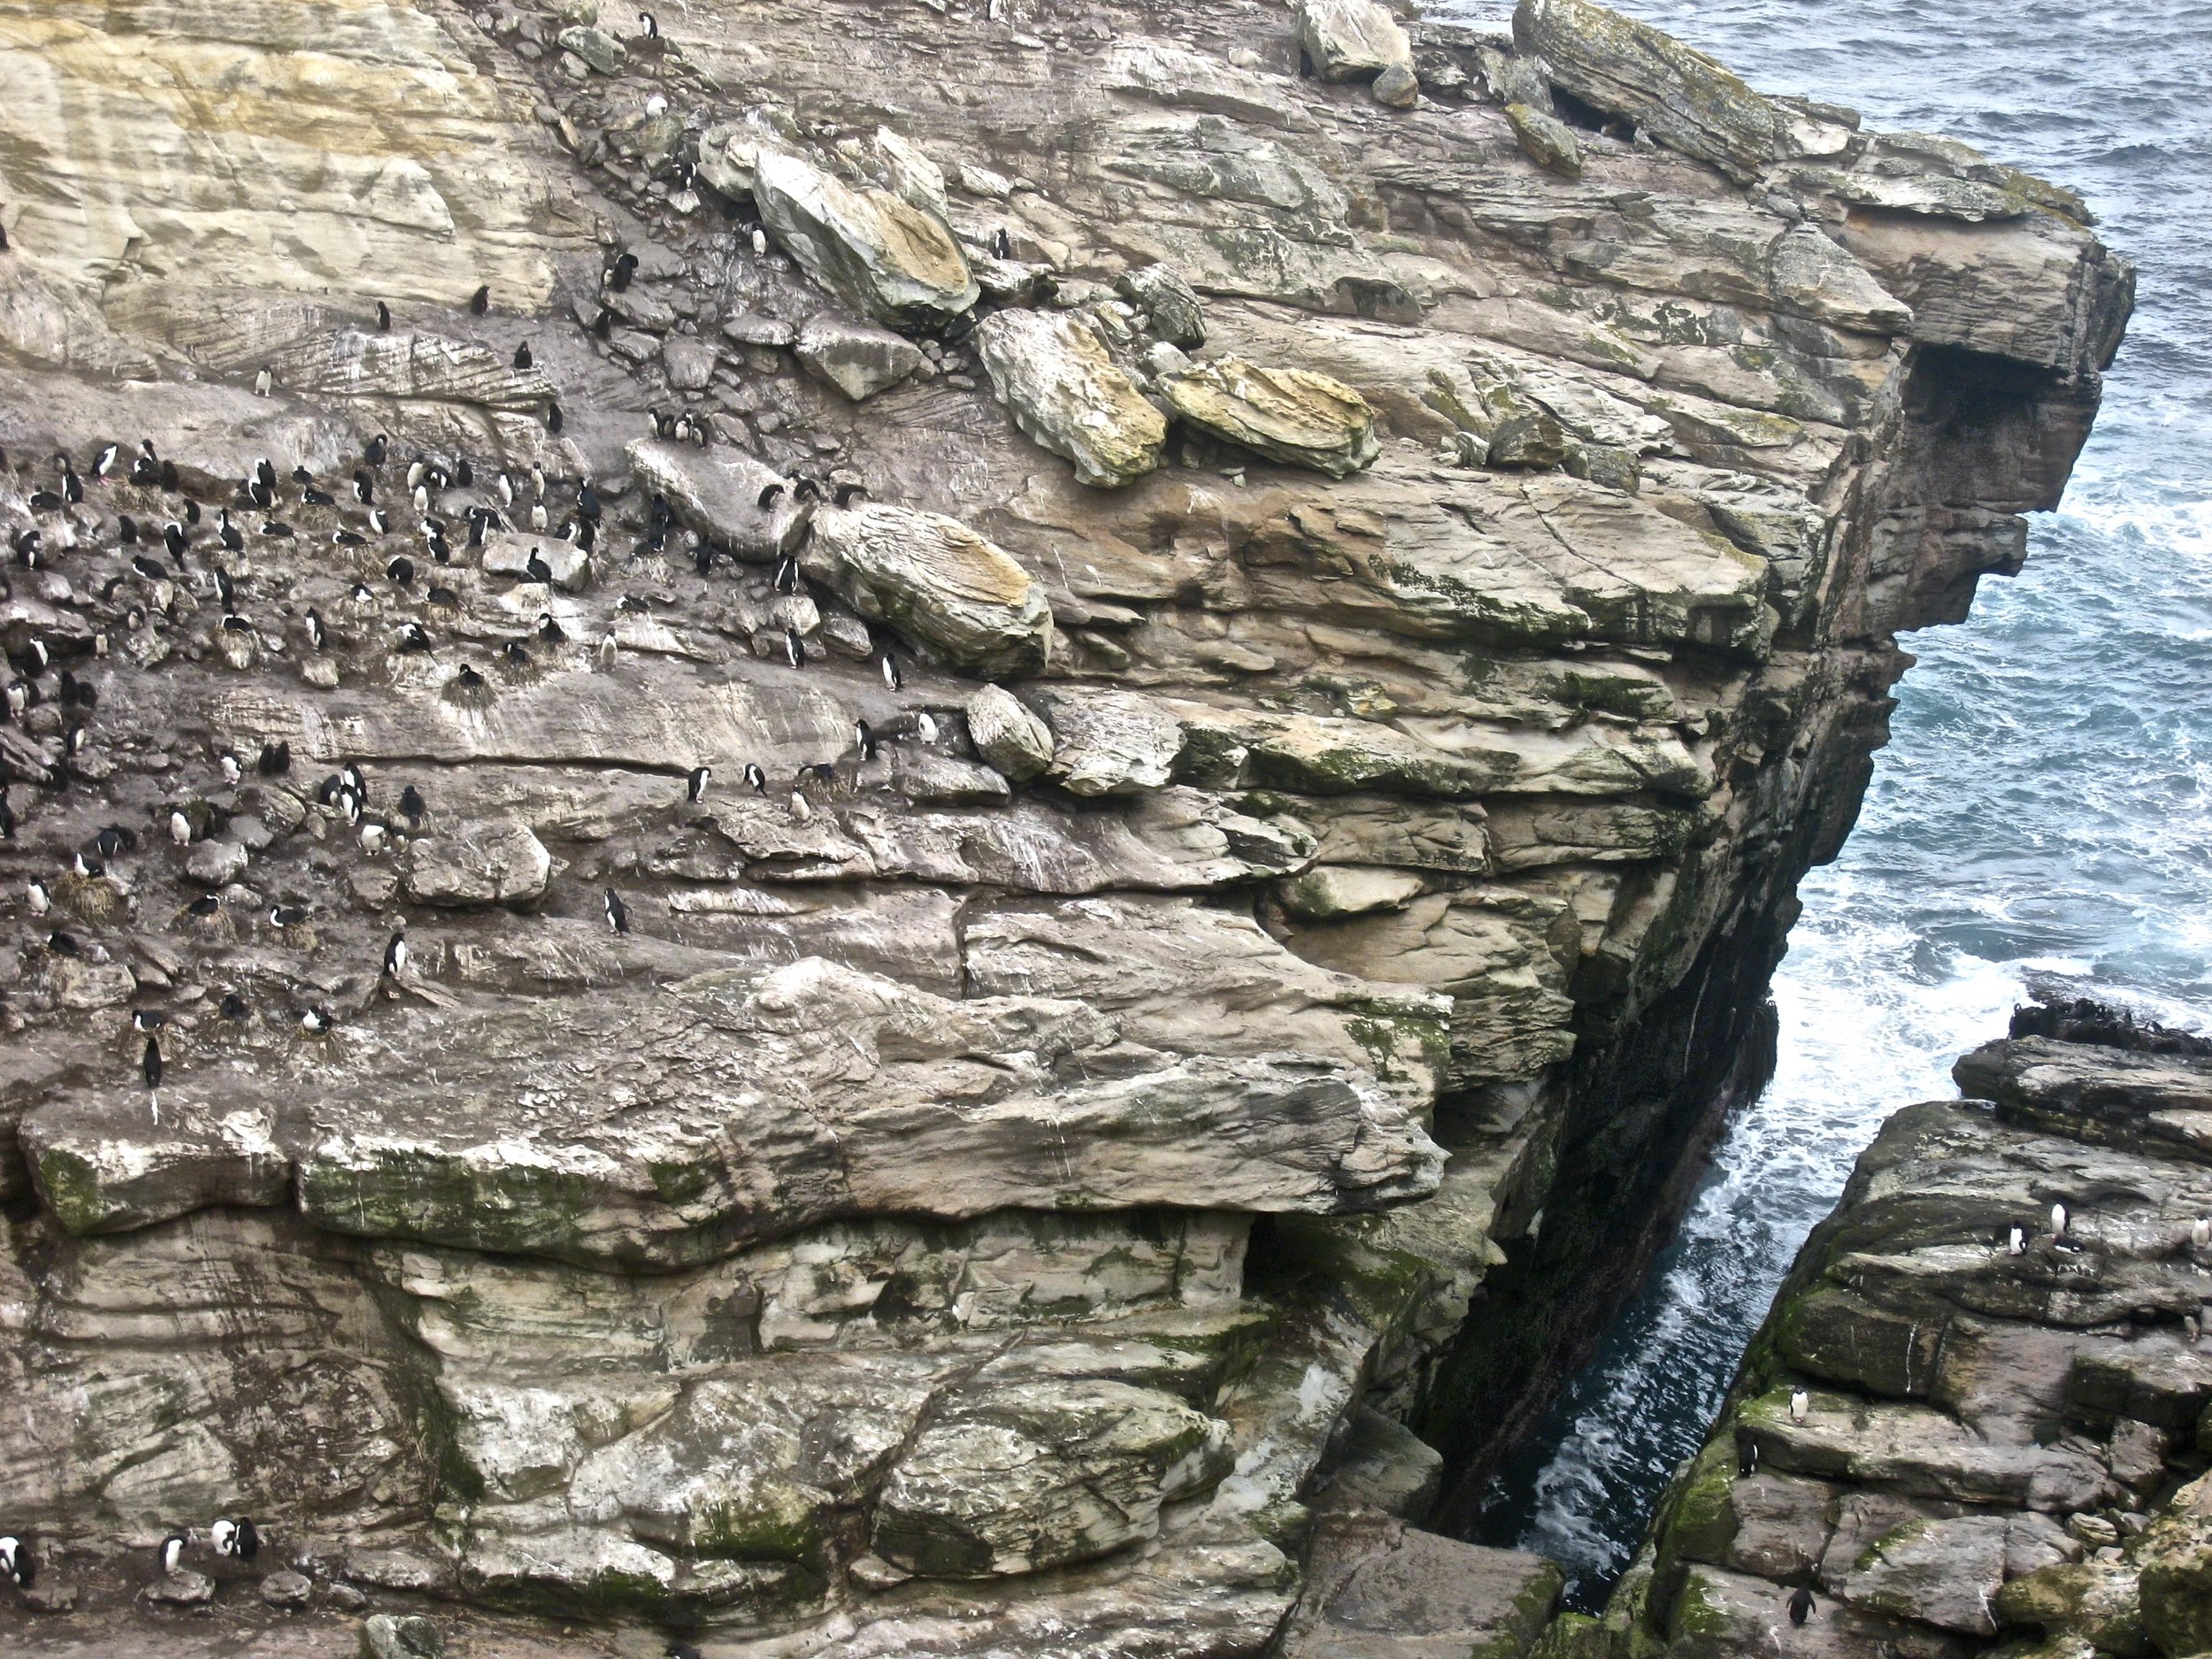 Rockhopper penguins, Albatrosses and Cormorants share the same cliffs